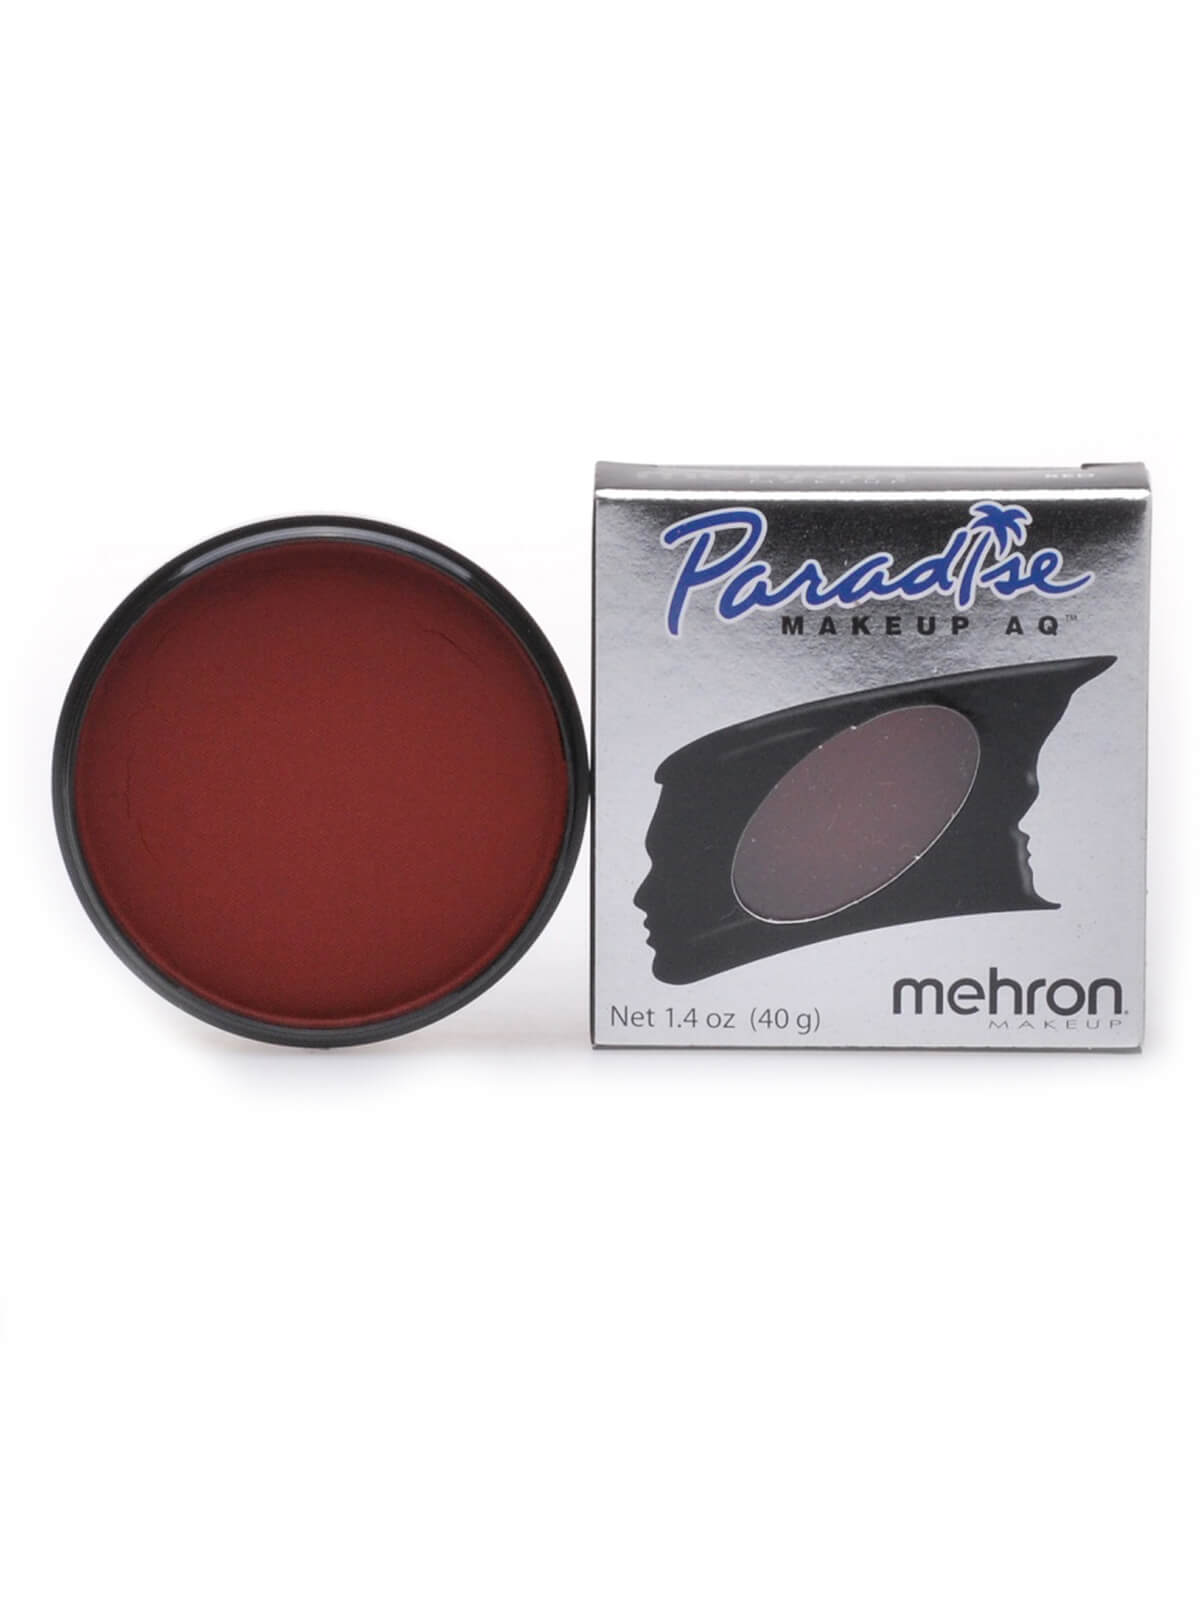 Mehron Paradise Makeup AQ - Basic -Red